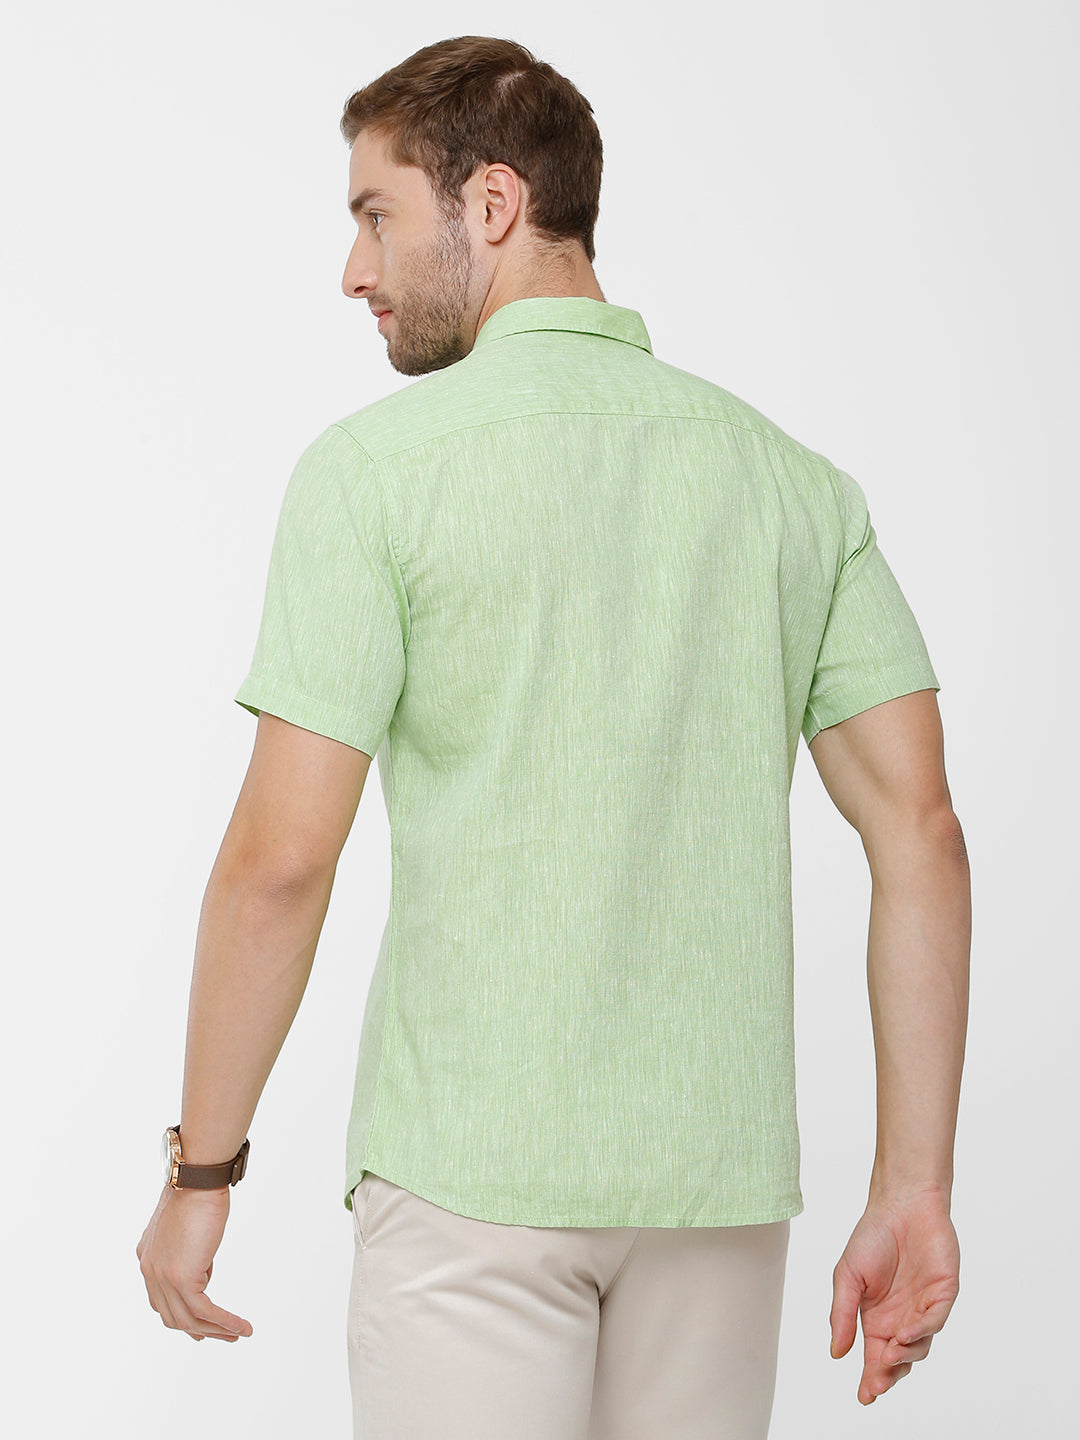 Classic Polo Mens Green Linen Cotton Woven Shirt - Porsh Green HS